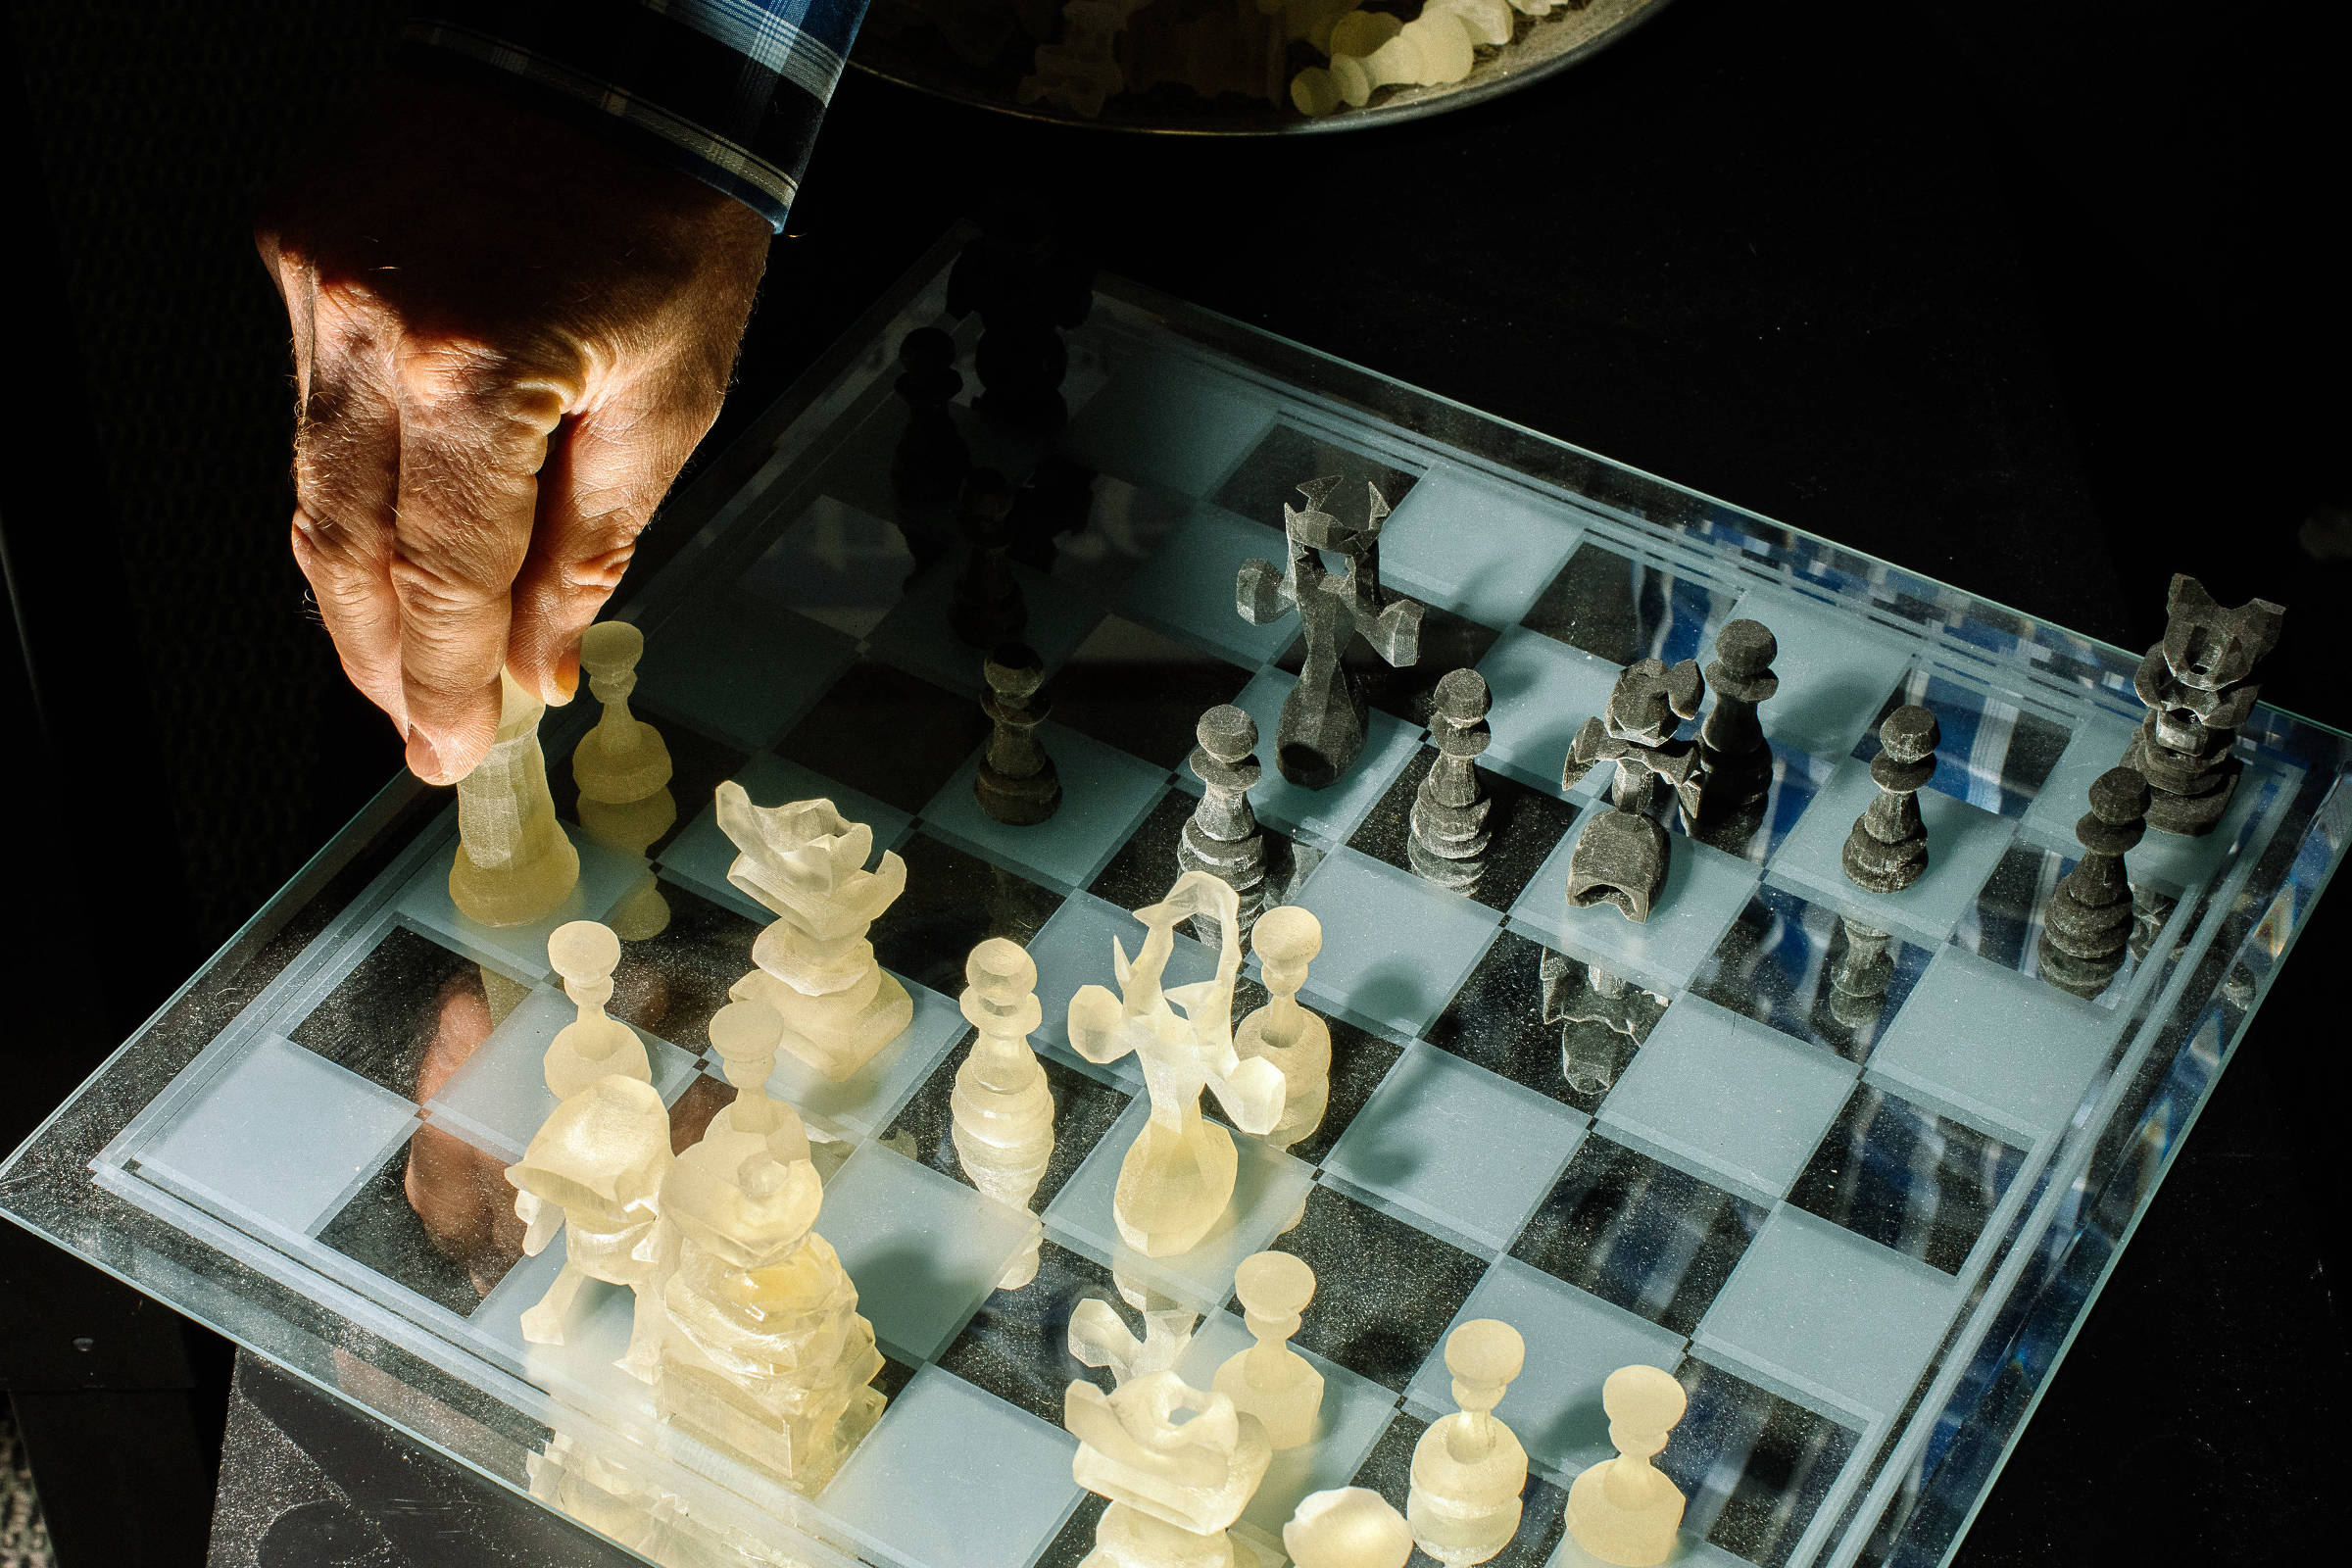 Estúdio brasileiro revela novo jogo de xadrez online para PC e